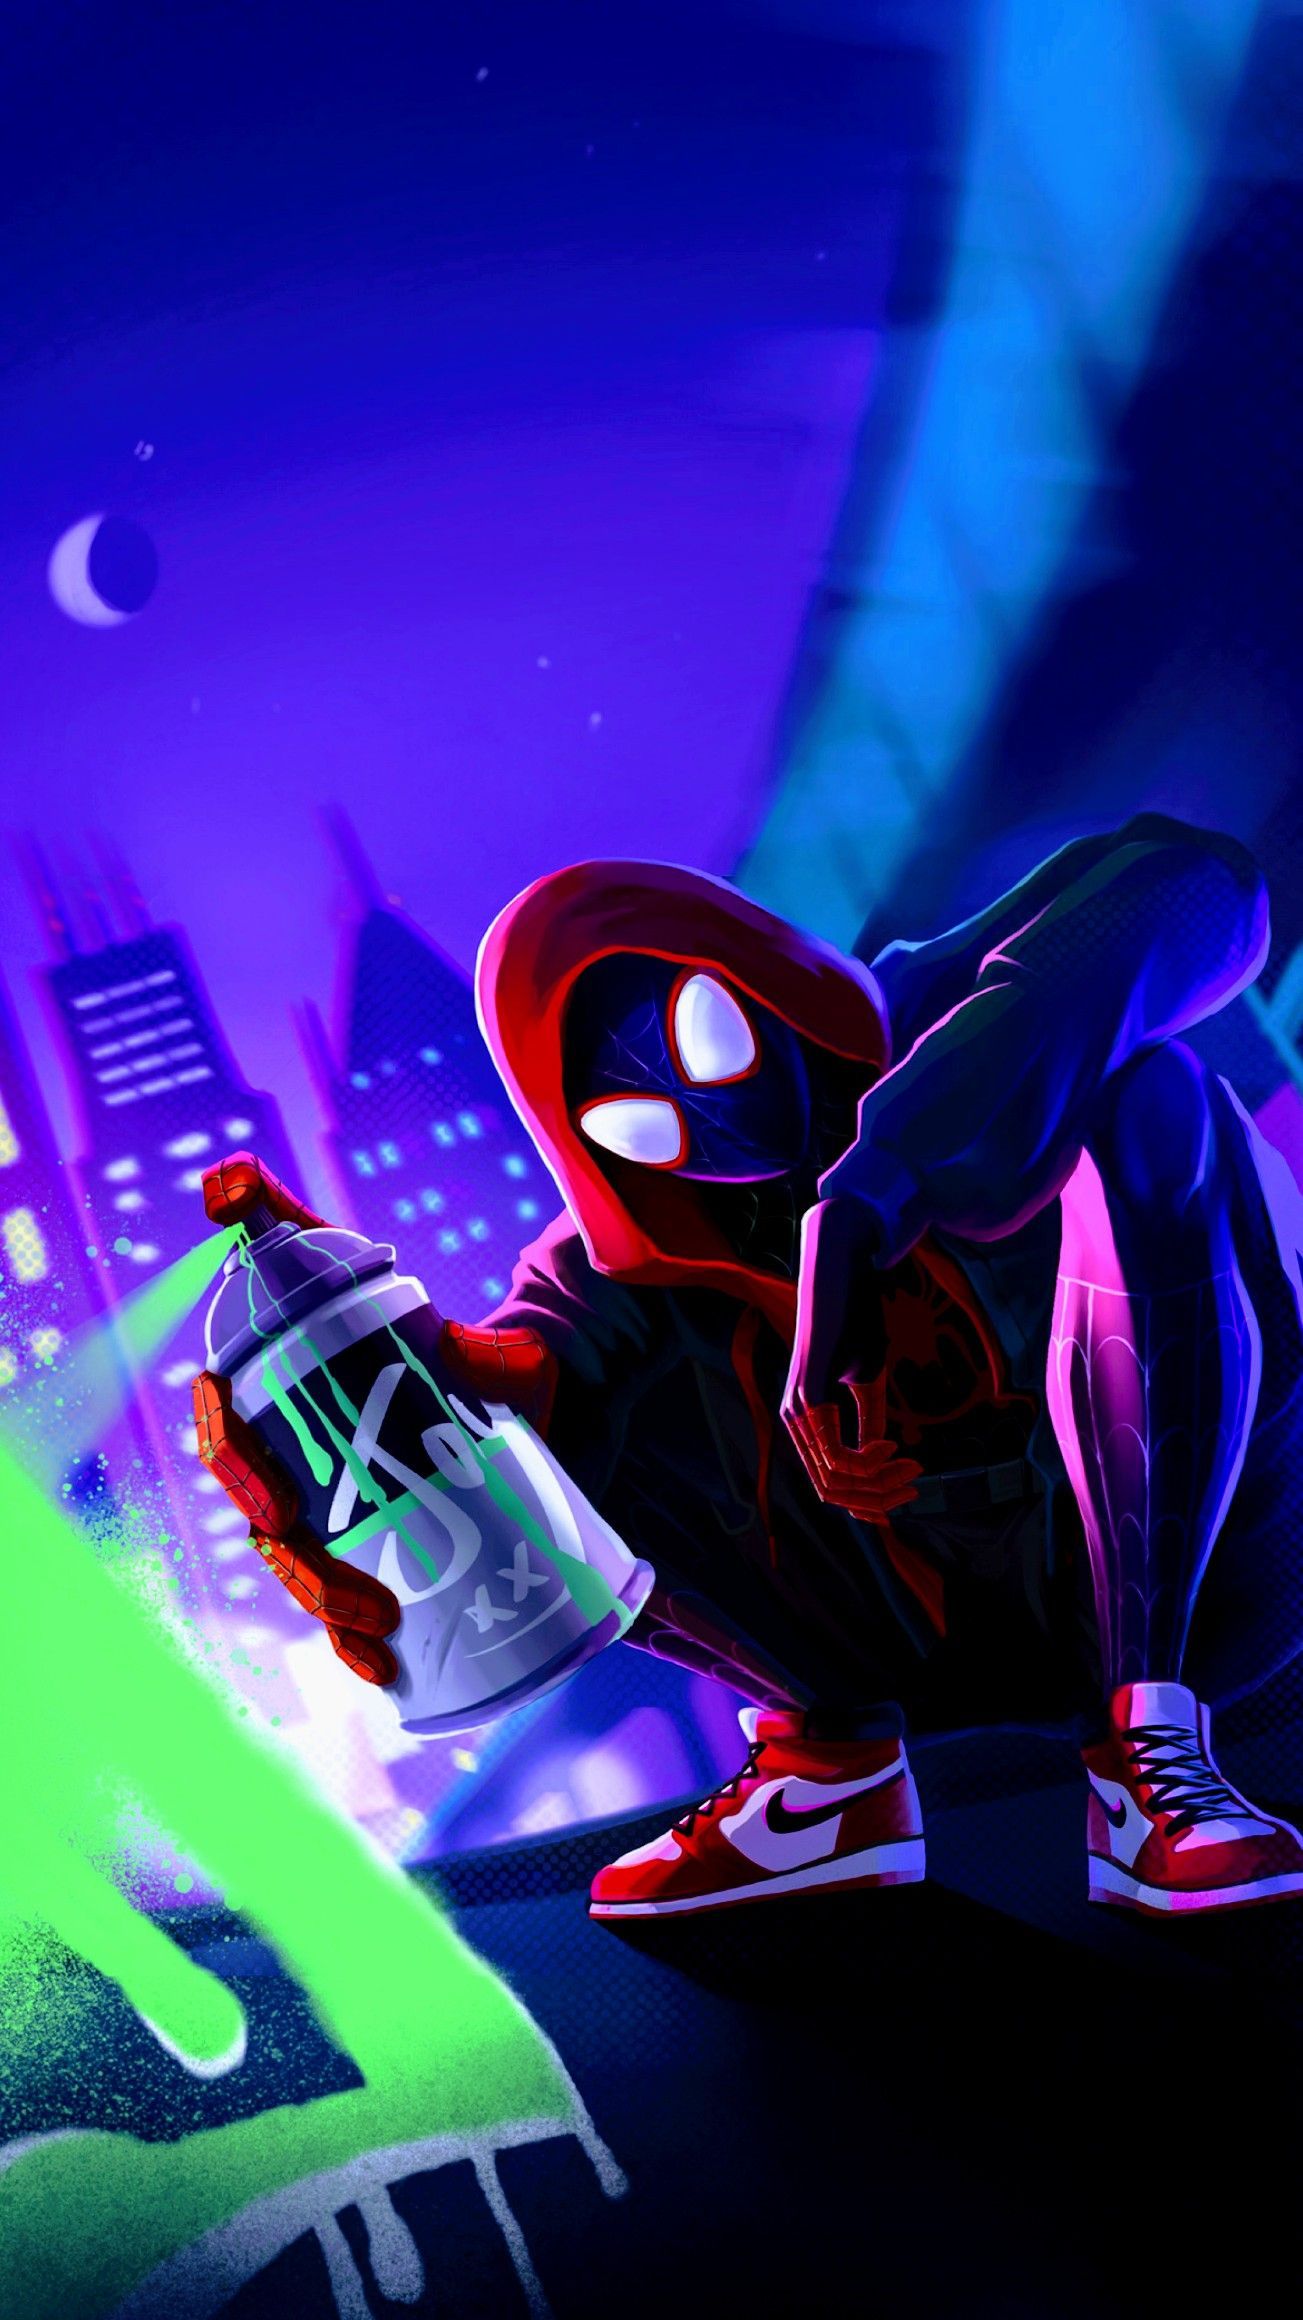 Miles Morales Spider Man, Into The Spider Verse. Marvel Superhero Posters, Marvel Background, Superhero Wallpaper